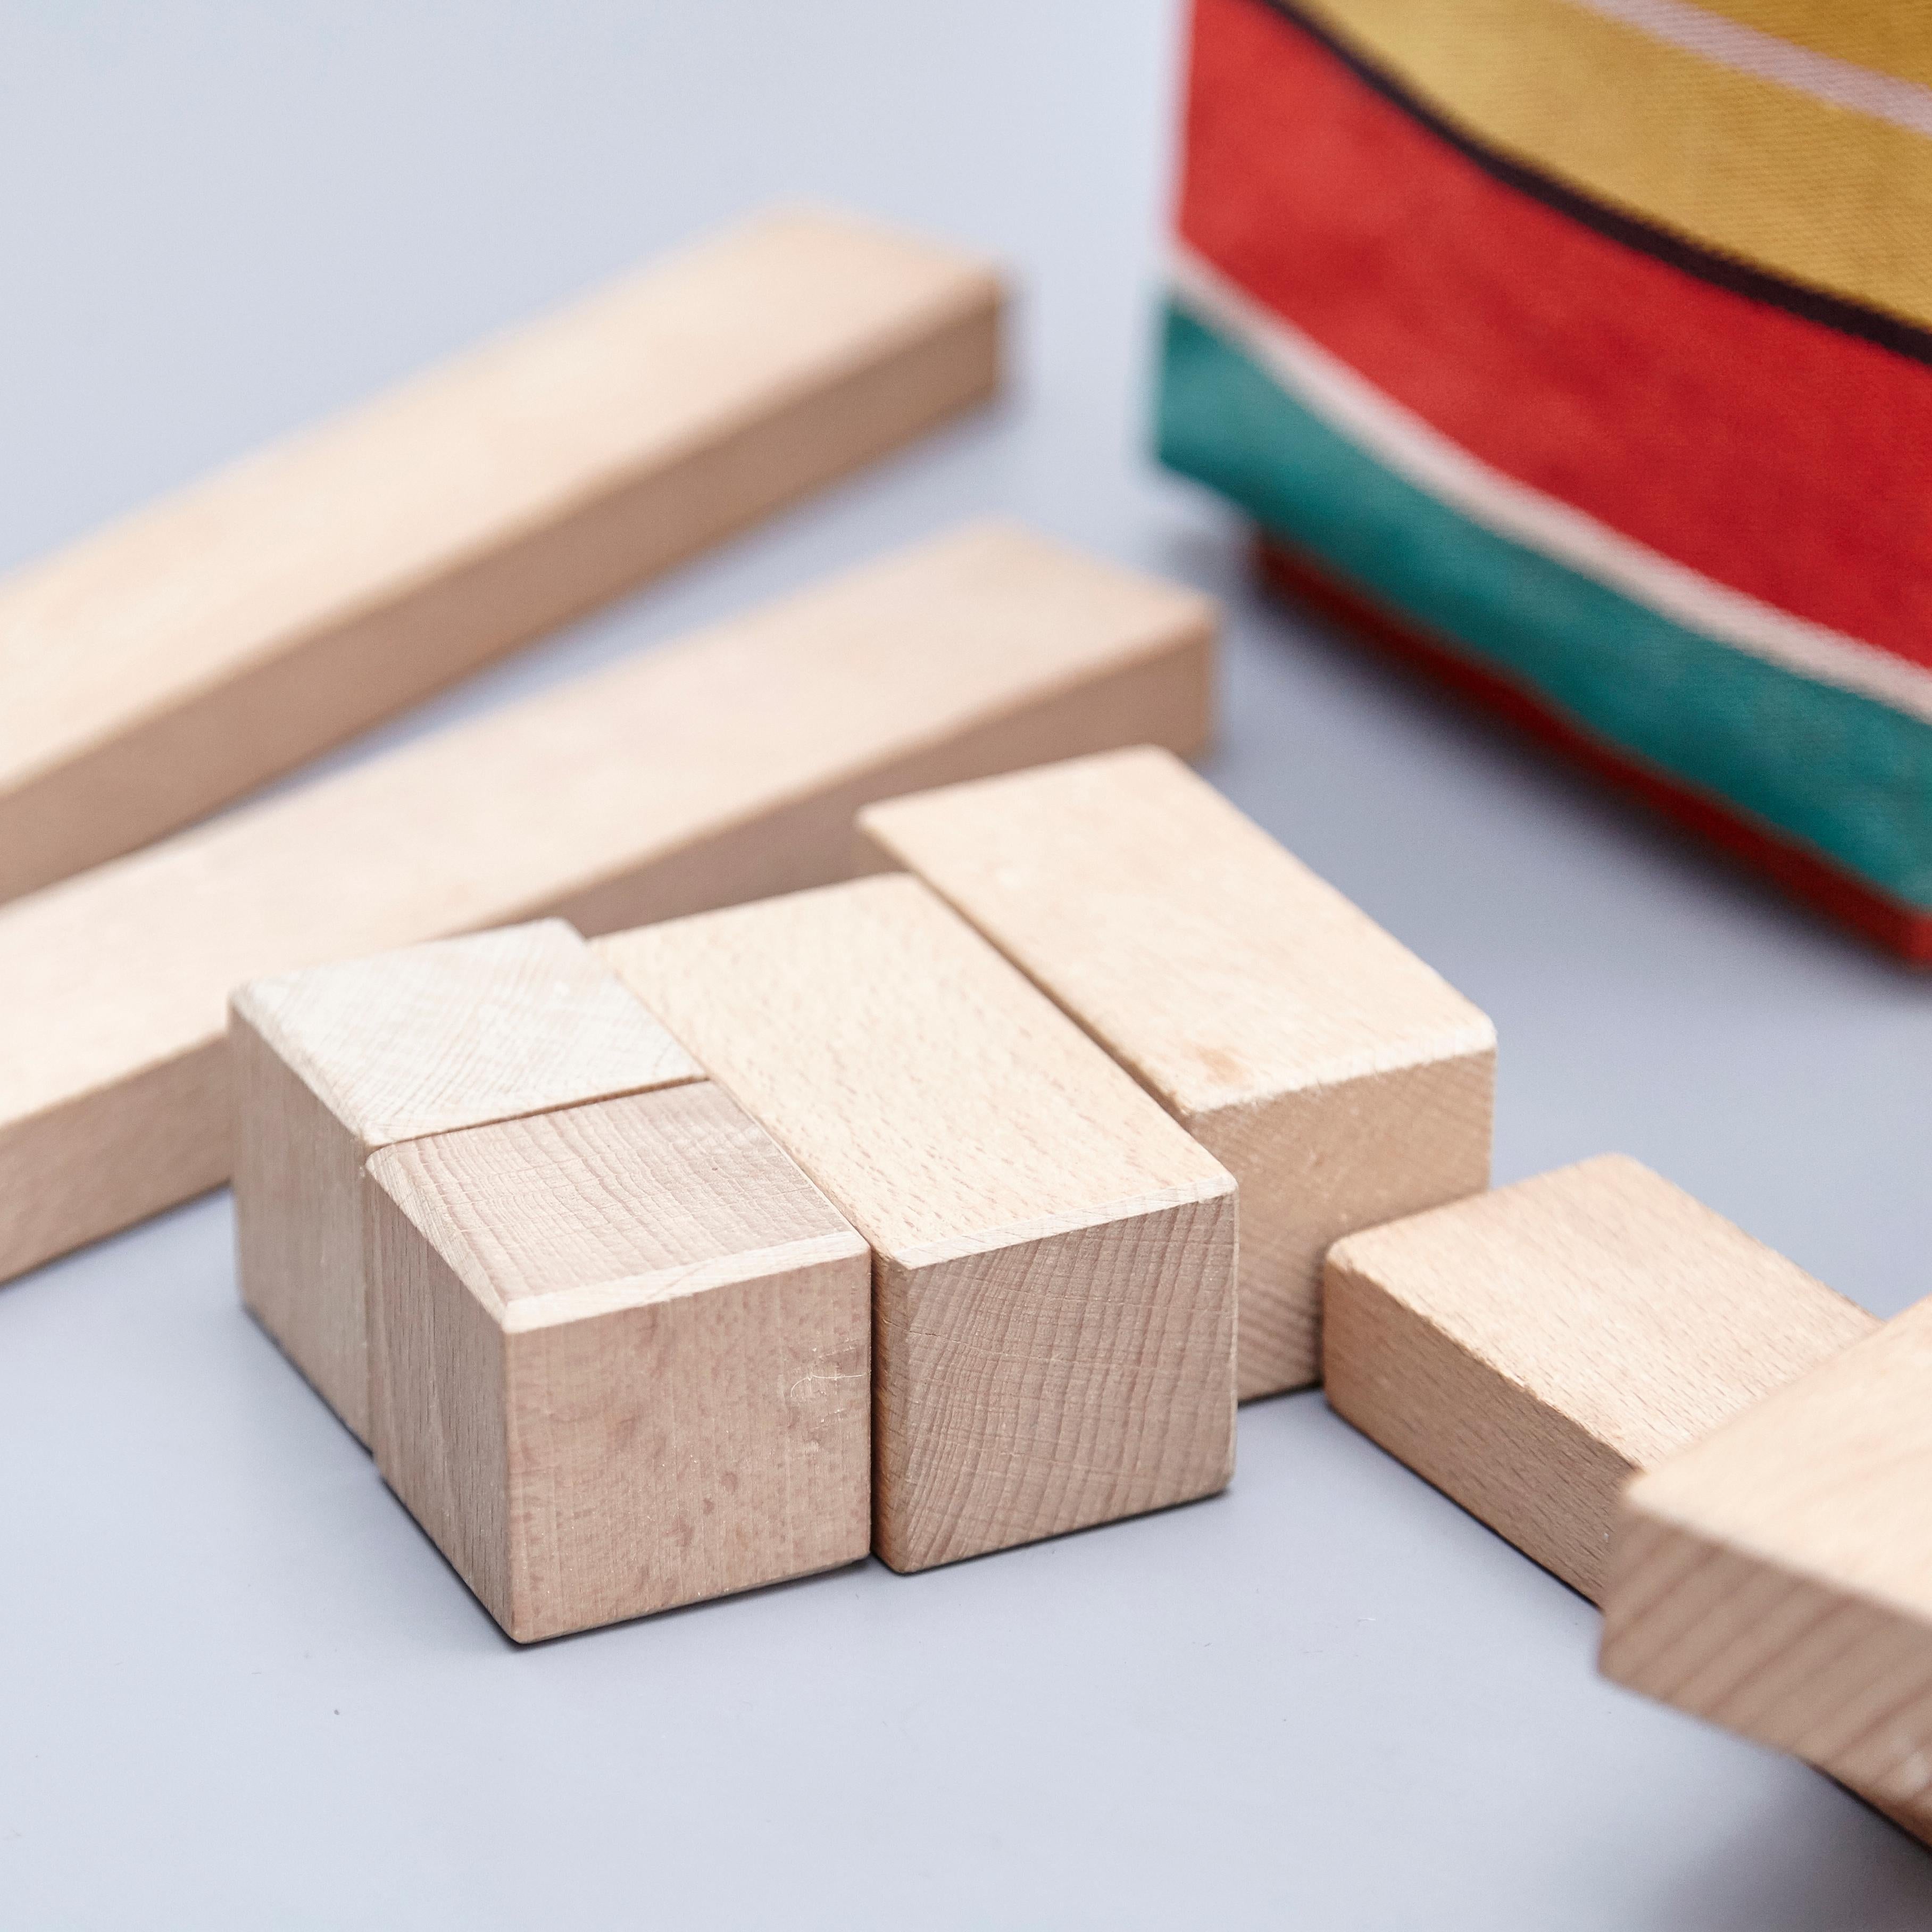 Canvas Ko Verzuu for Ado, Mid Century Modern, Wood Blocks Construction Netherlands Toy 